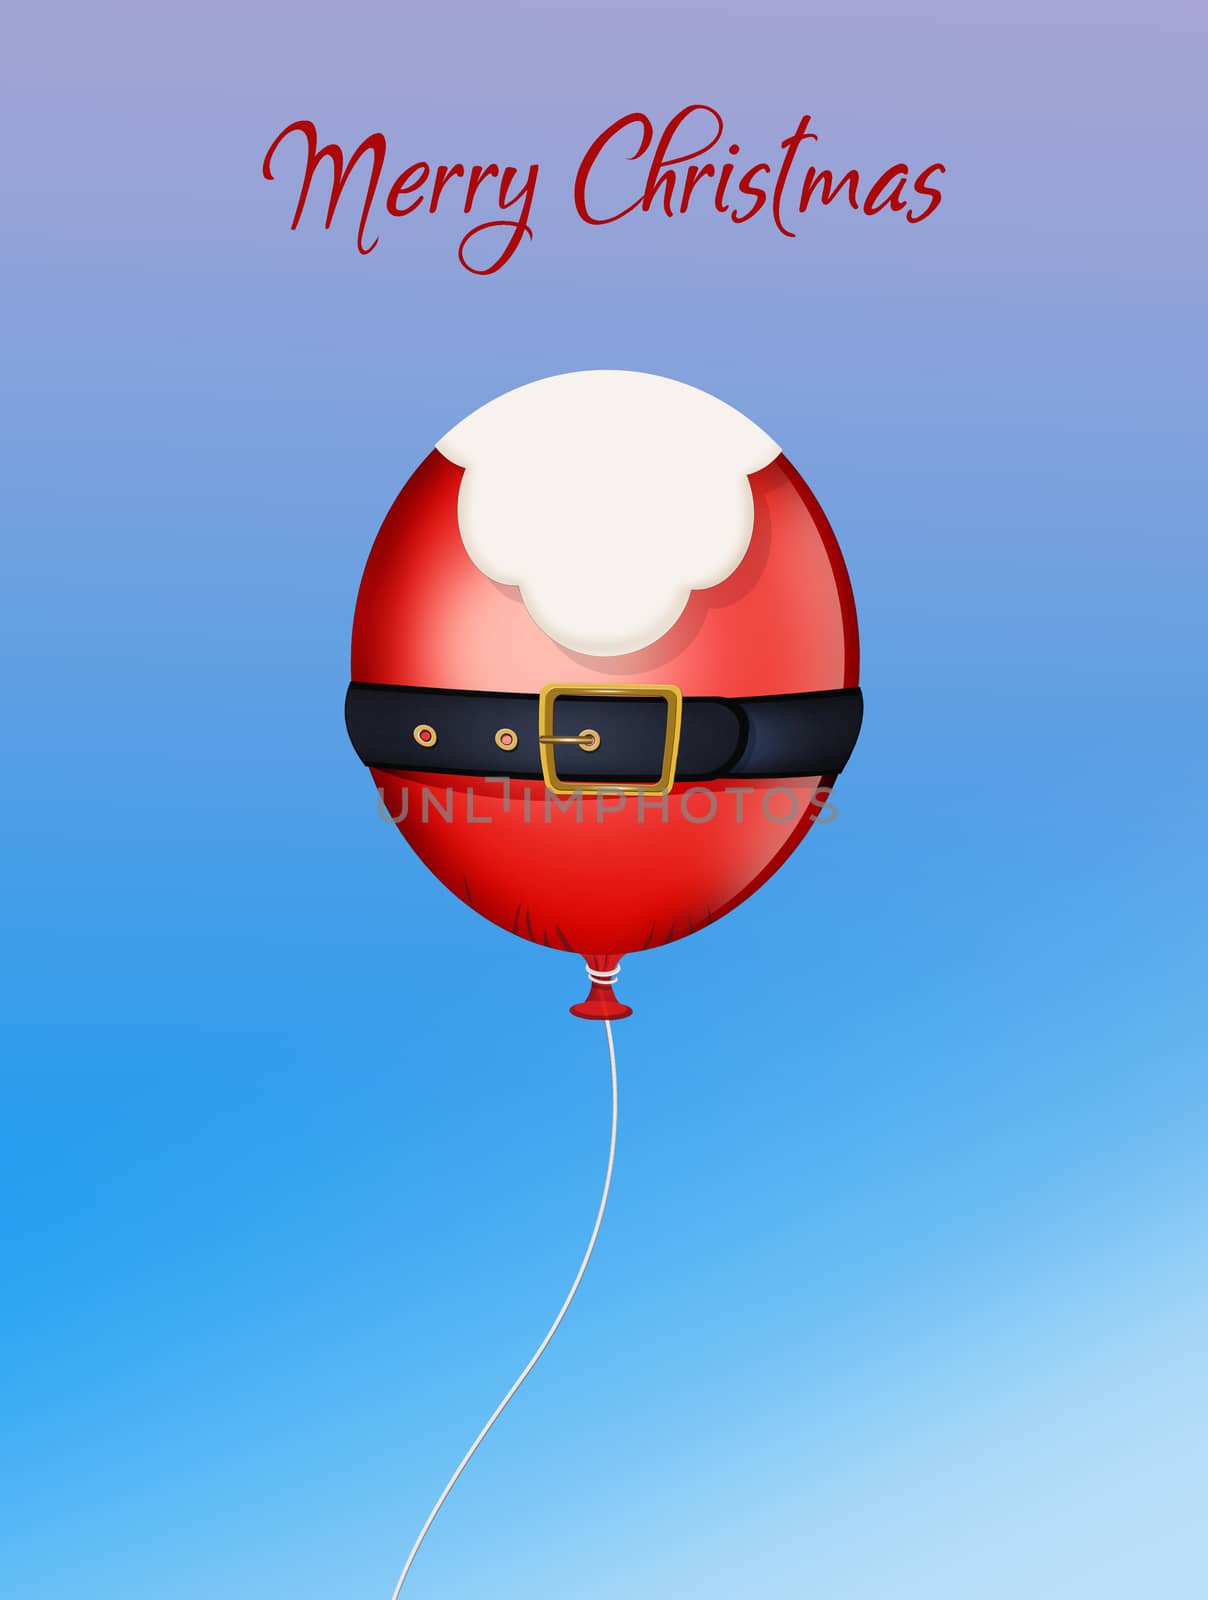 Santa Claus balloon in the sky by adrenalina